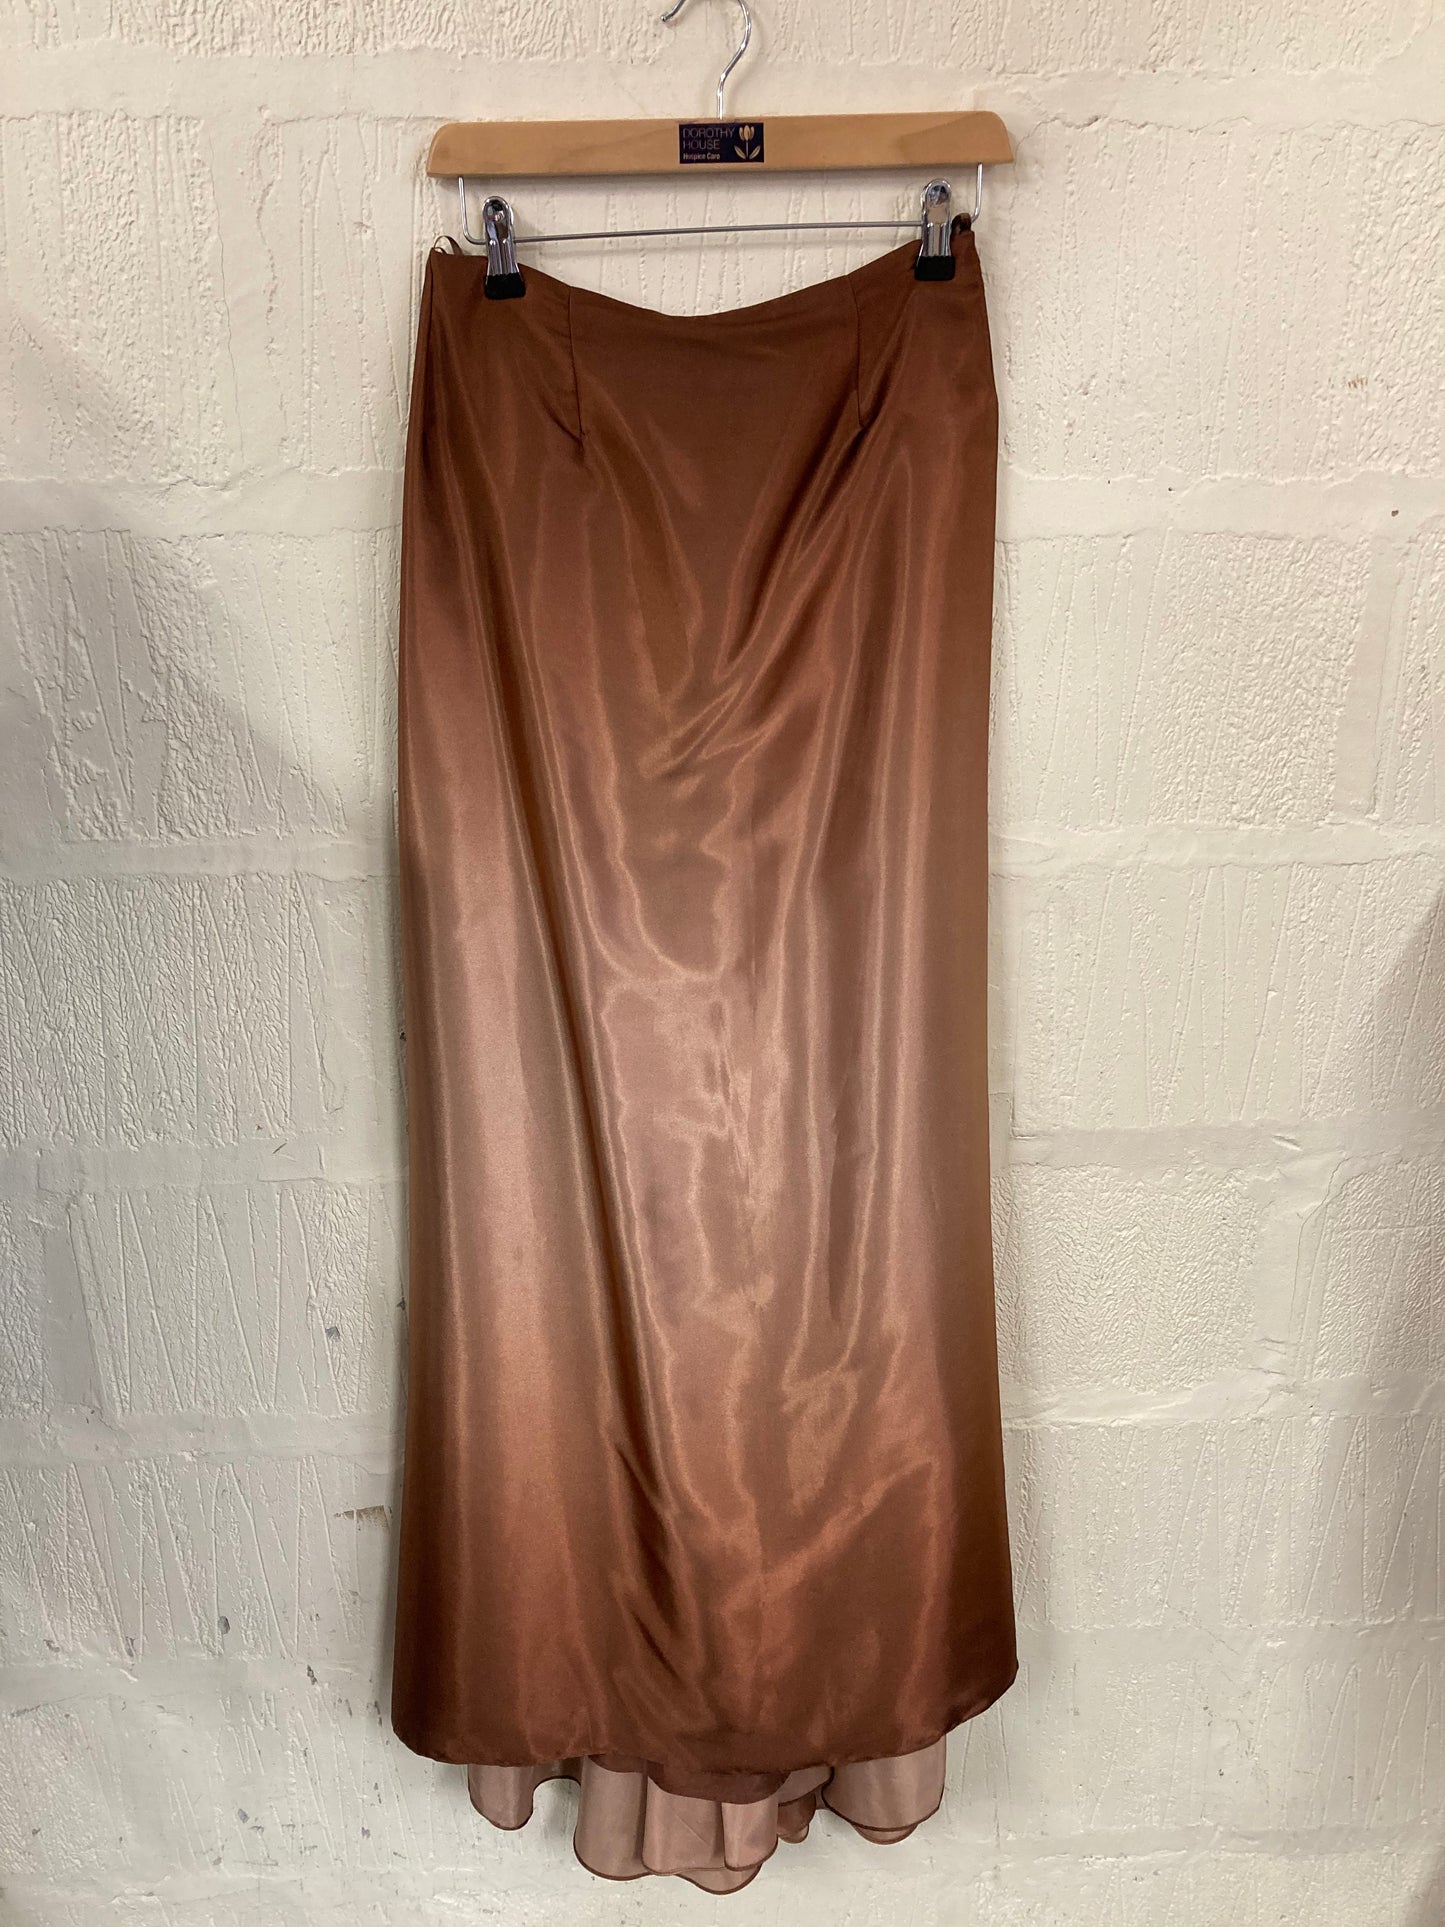 Designer Bronze Ombre Maxi Skirt with Fishtail hem Size 10